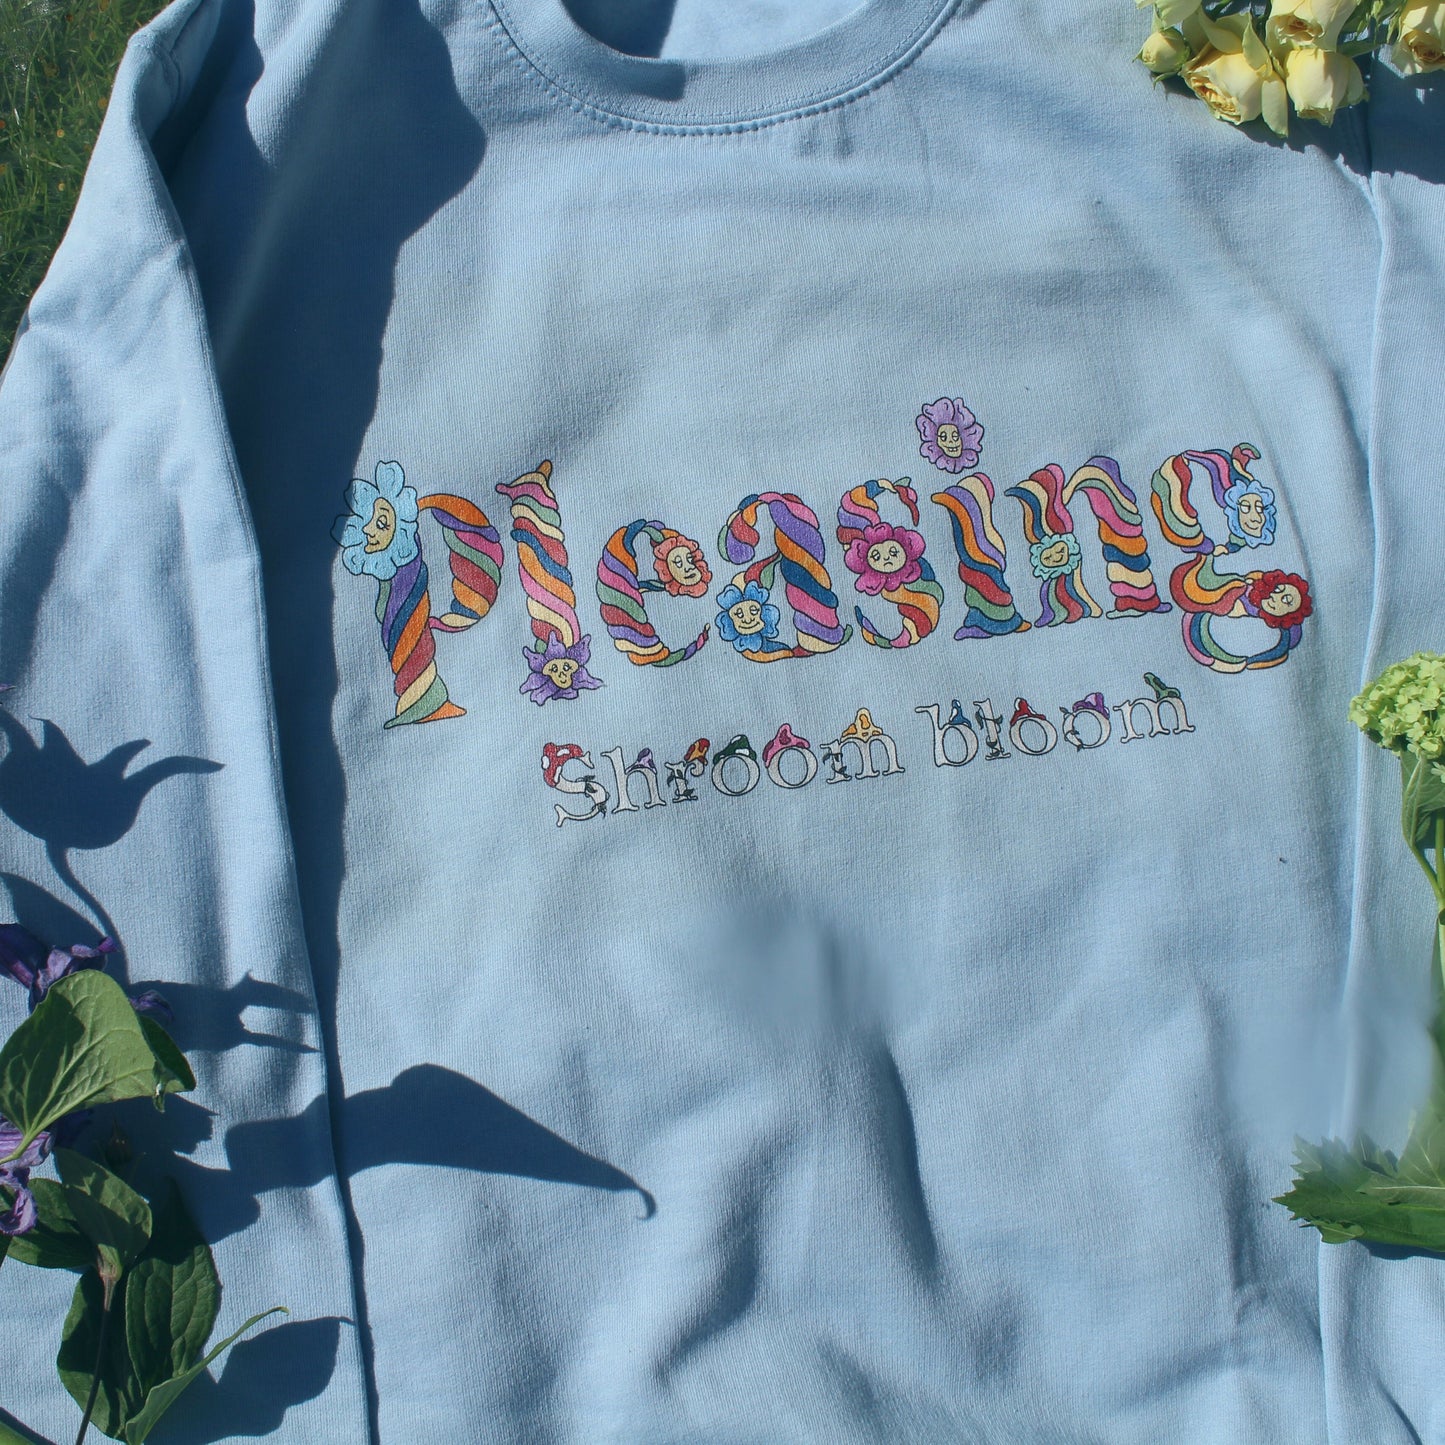 The Shrooming Bloom Sweatshirt